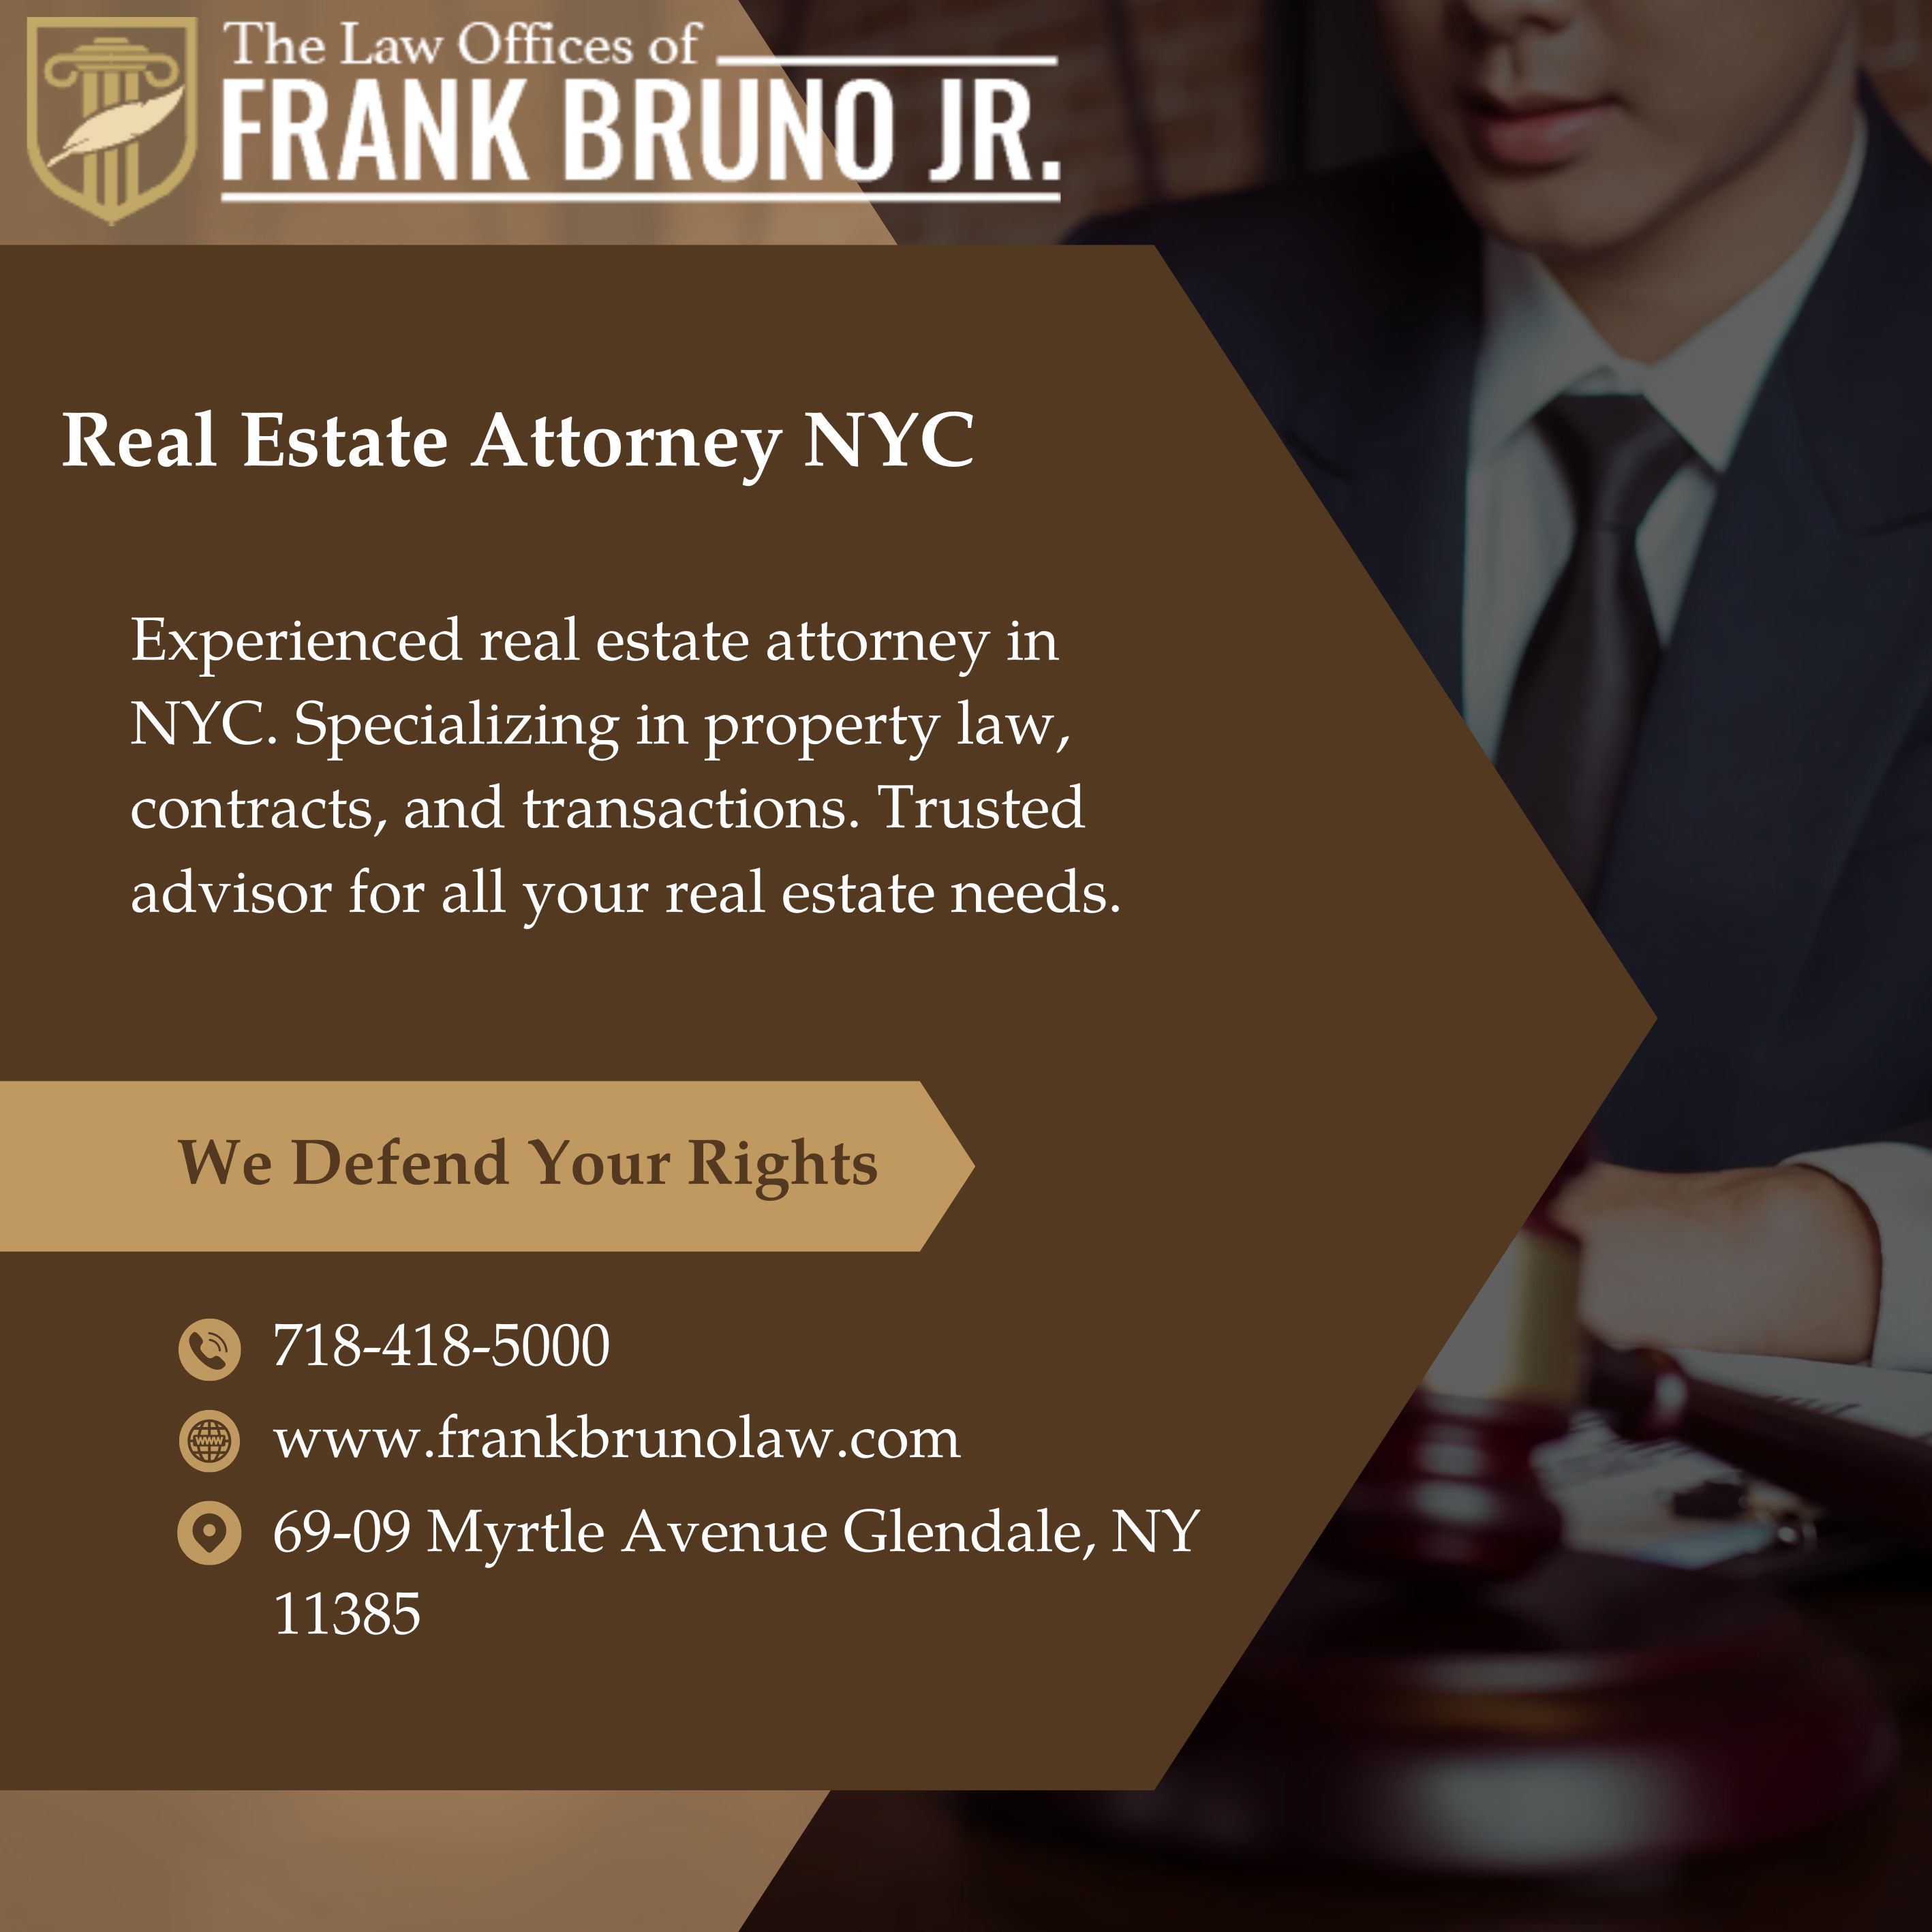 Real Estate Attorney NYC - New York - New York ID1559768